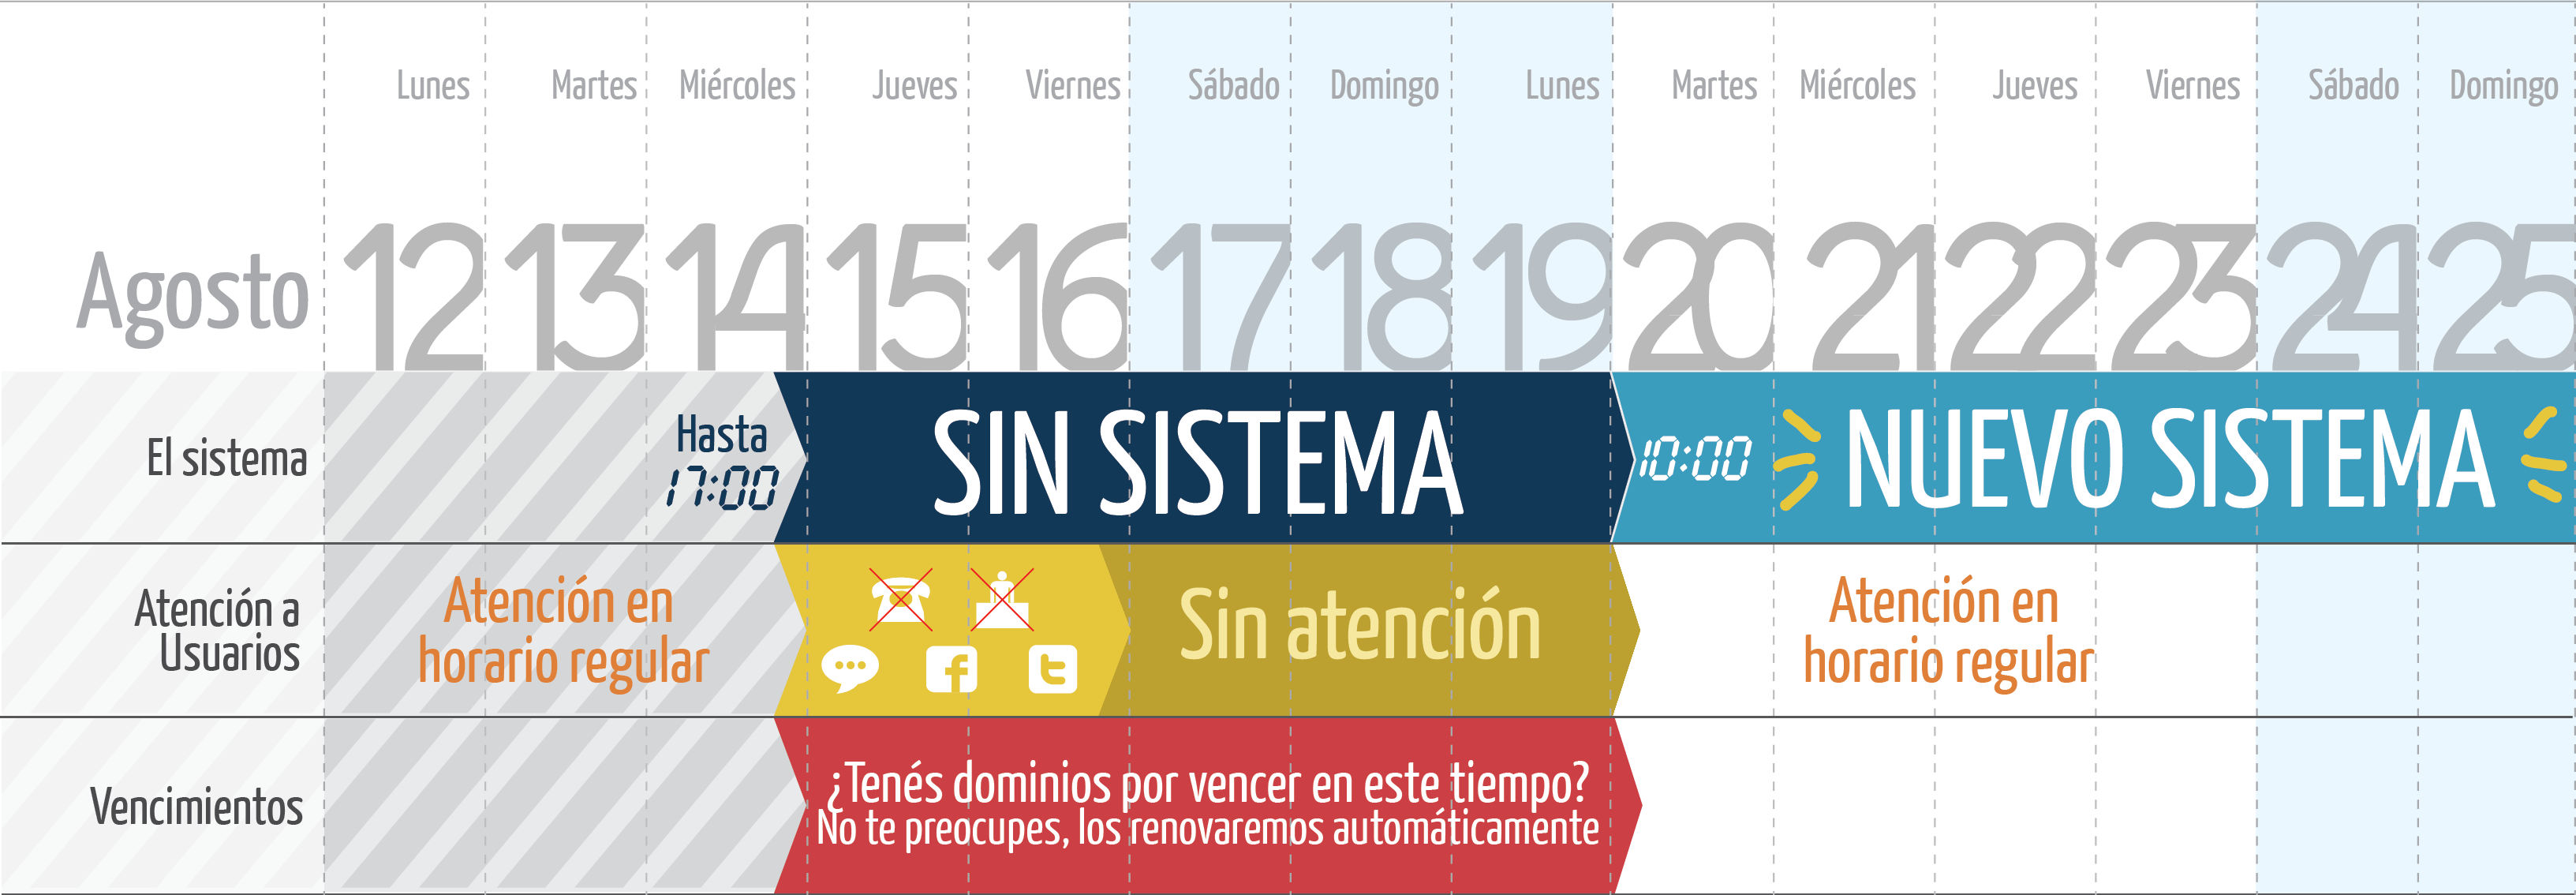 Timeline-Nuevo-Sistema-Nic-Argentina-Informatica-Legal